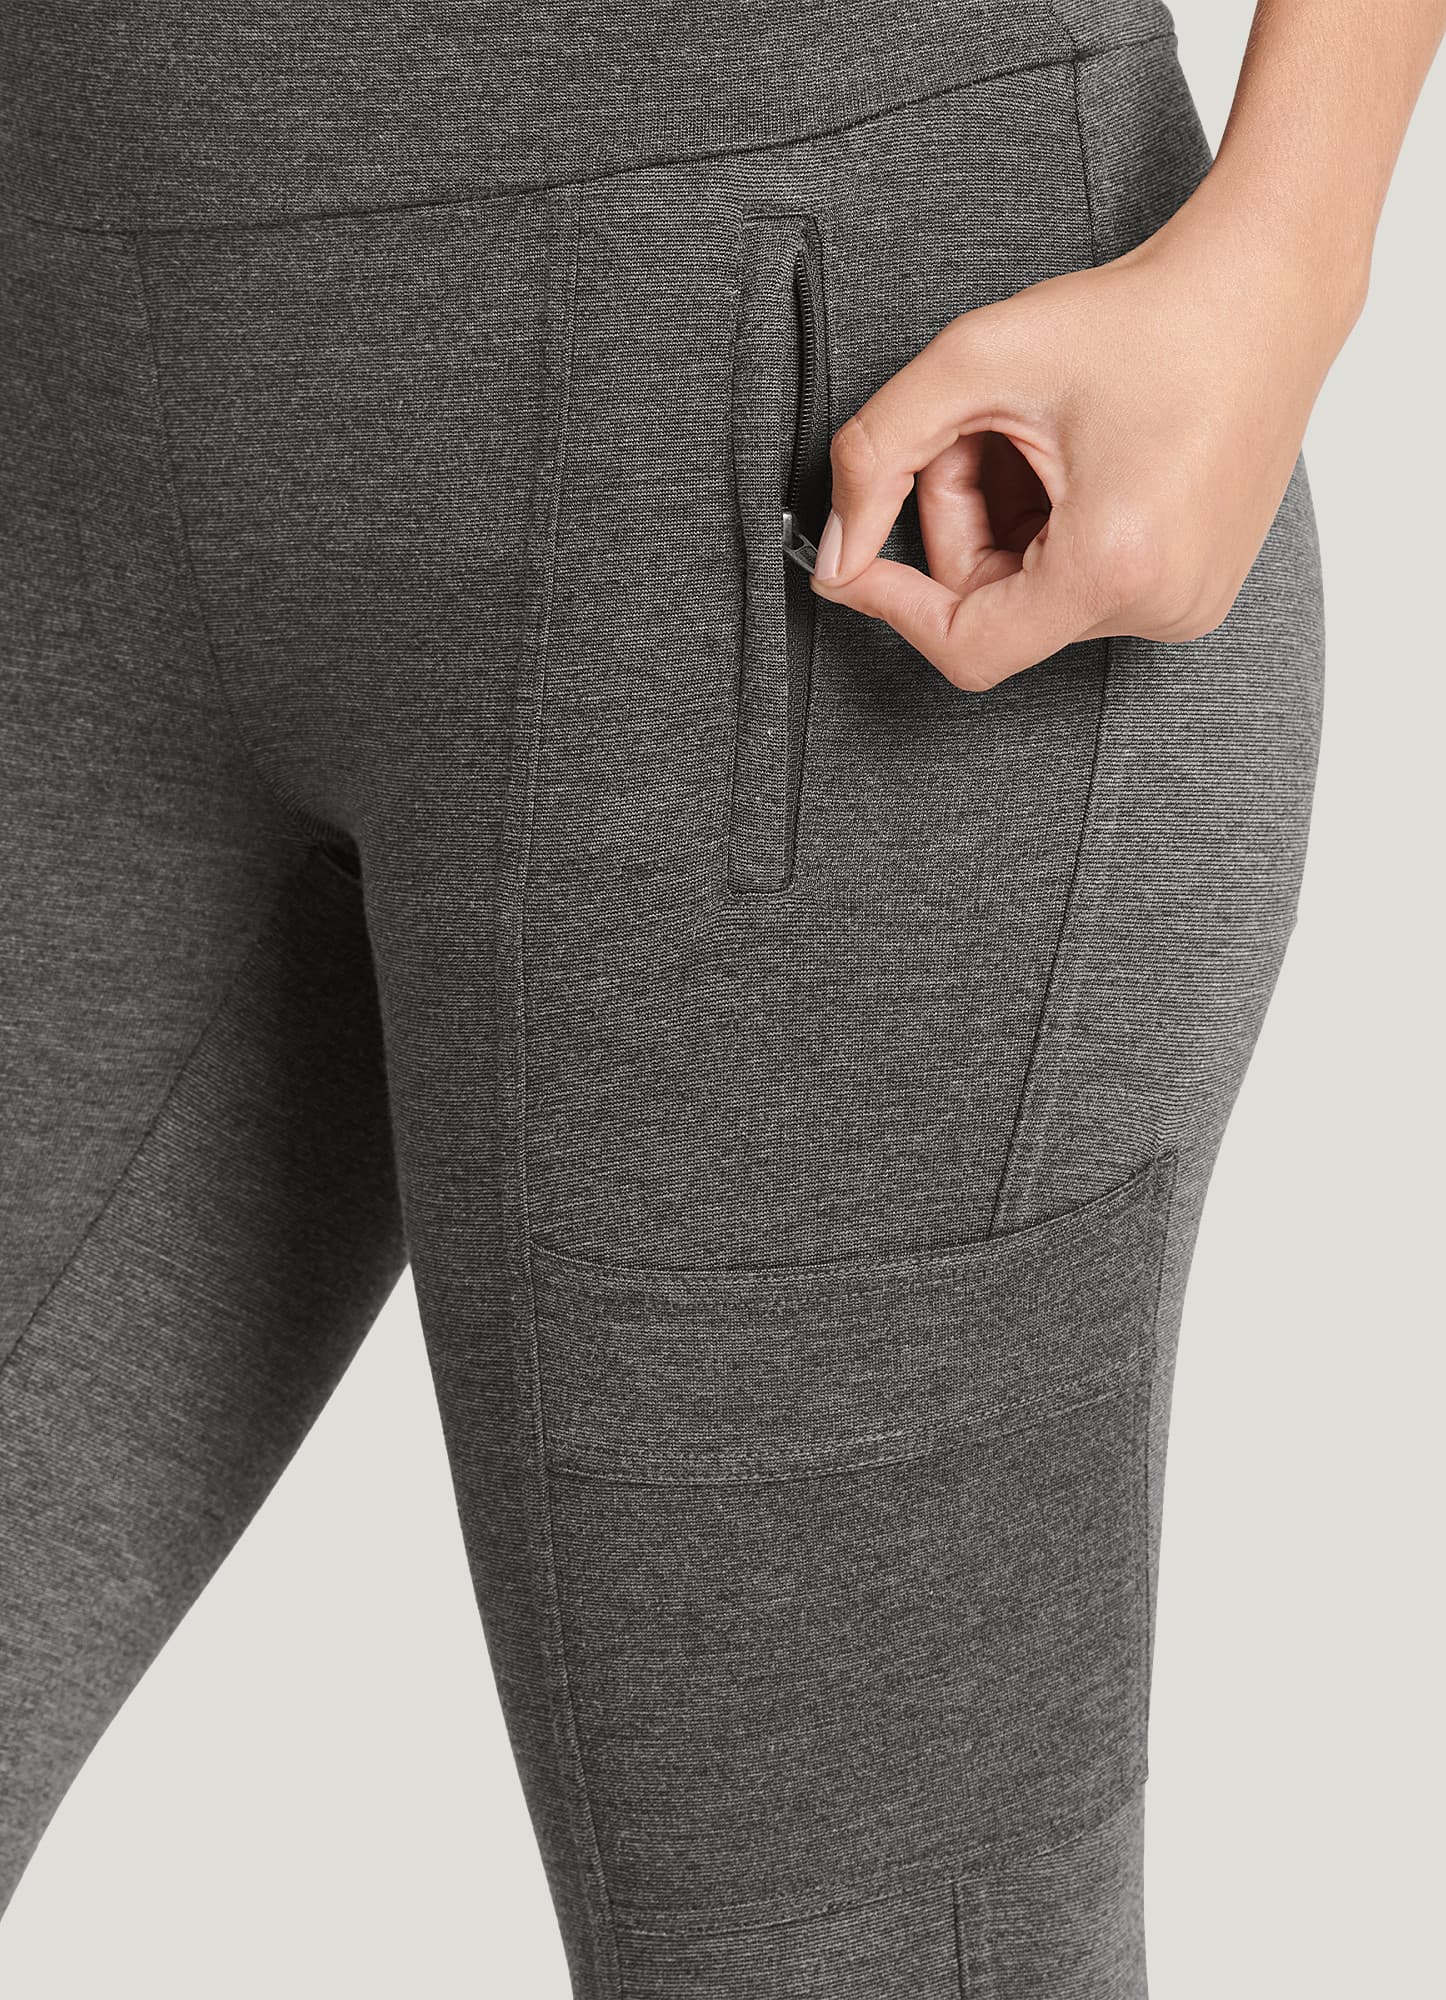 Jockey yoga pants  Clothes design, Yoga pants, Women shopping